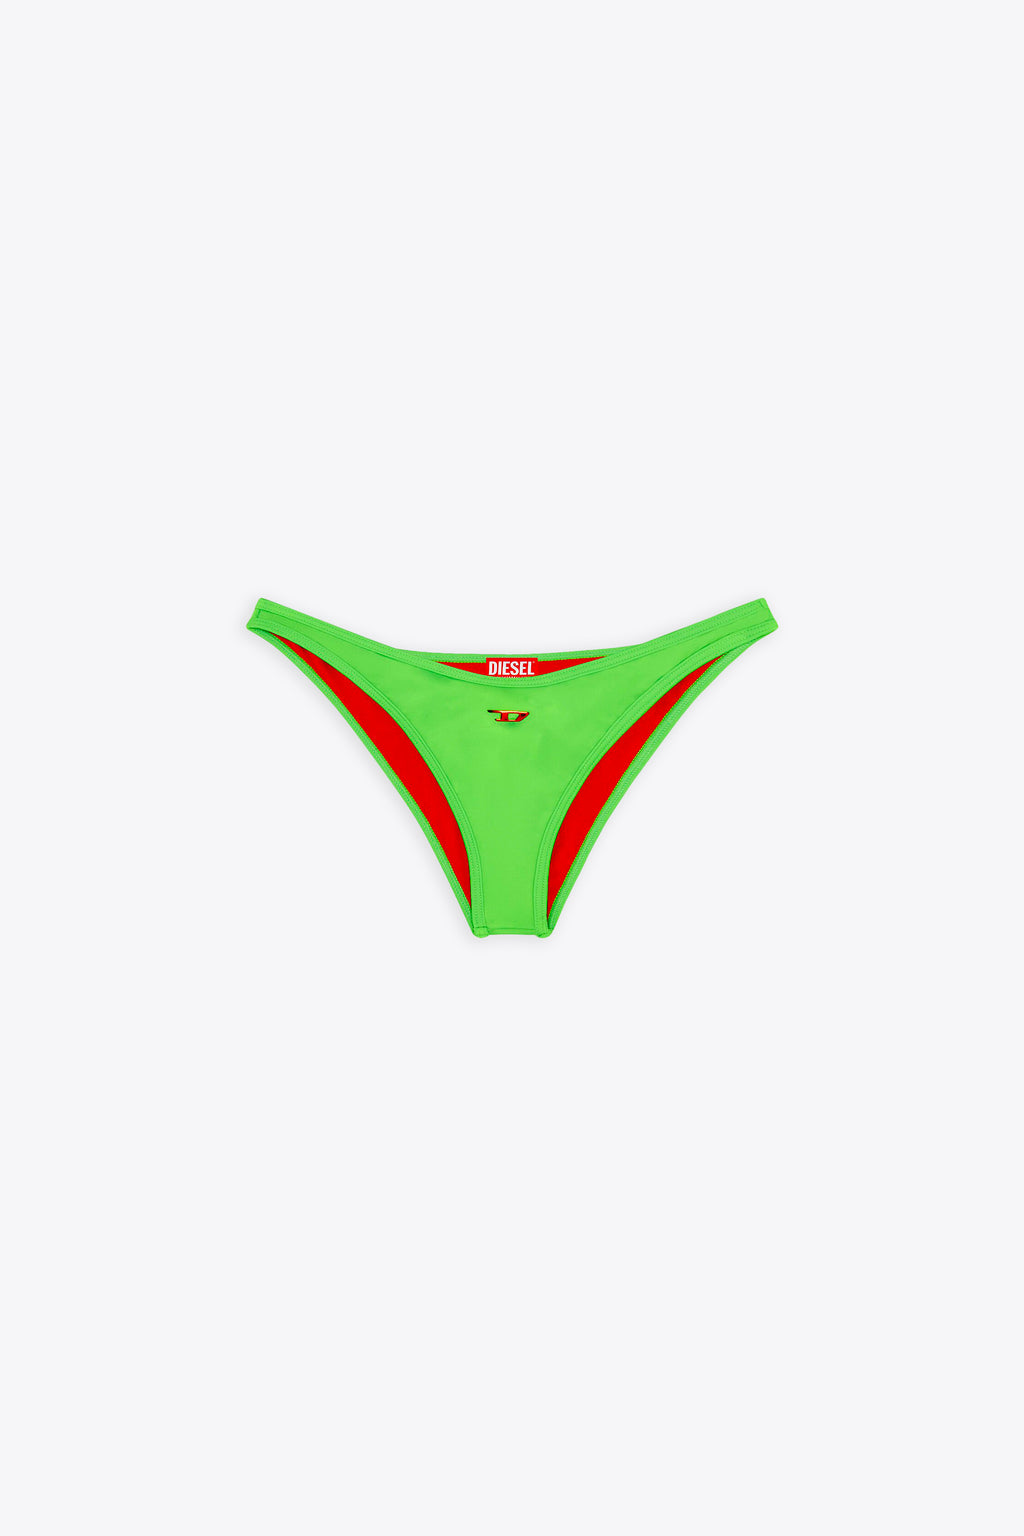 alt-image__Neon-green-lycra-swim-panties-with-Oval-D-logo---Bfpn-Punchy--X-